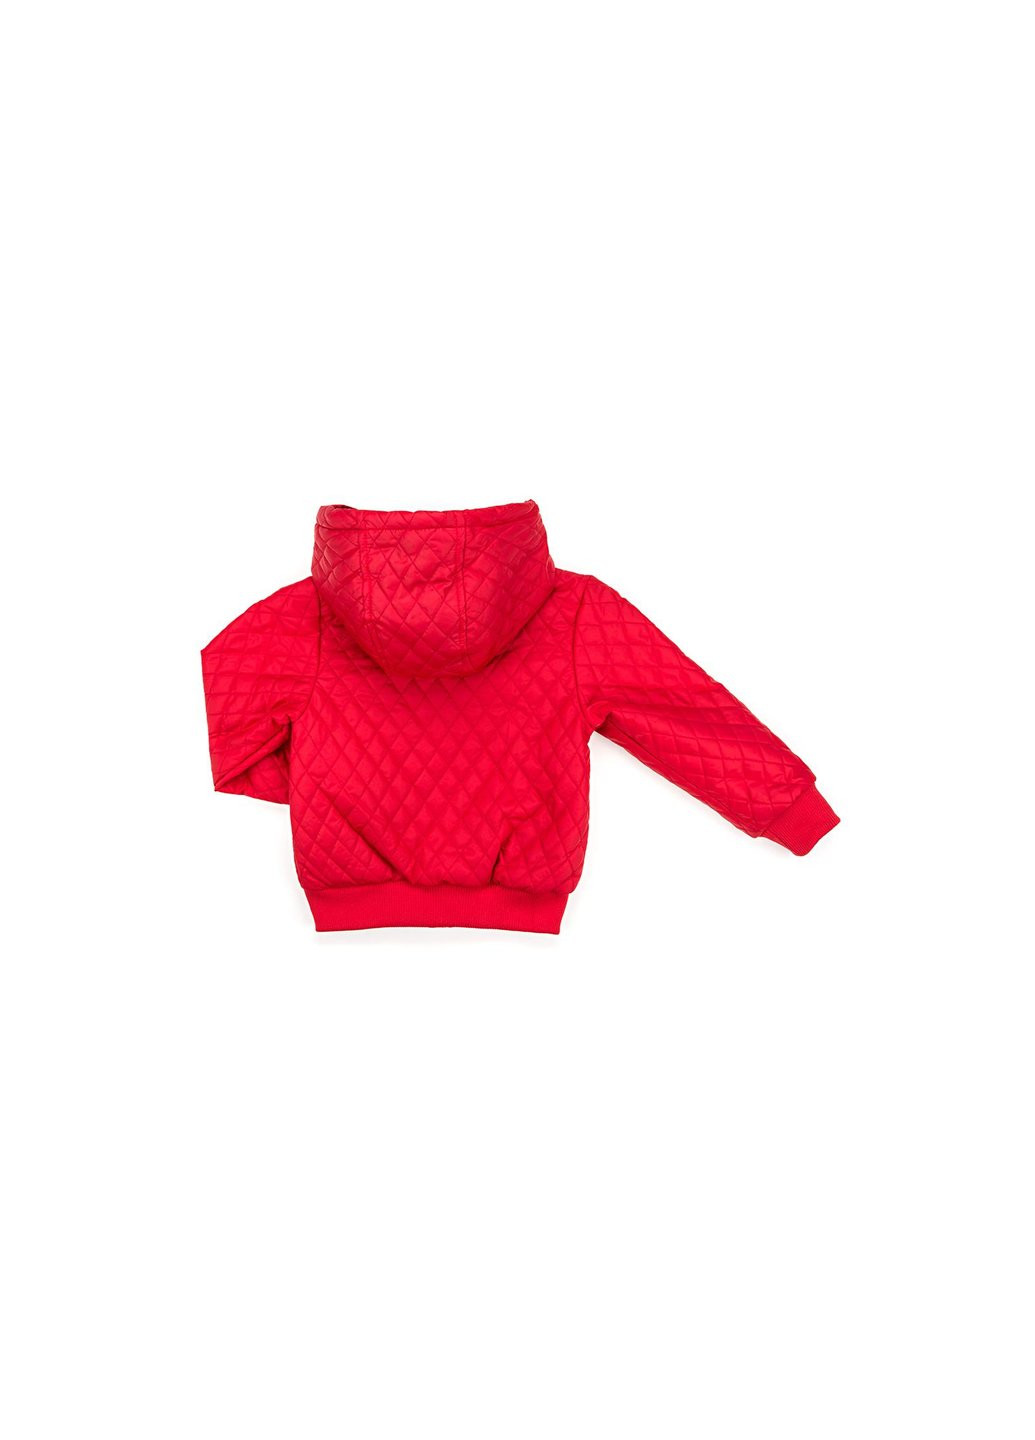 Червона демісезонна куртка стьобана з капюшоном (3439-98b-red) Verscon